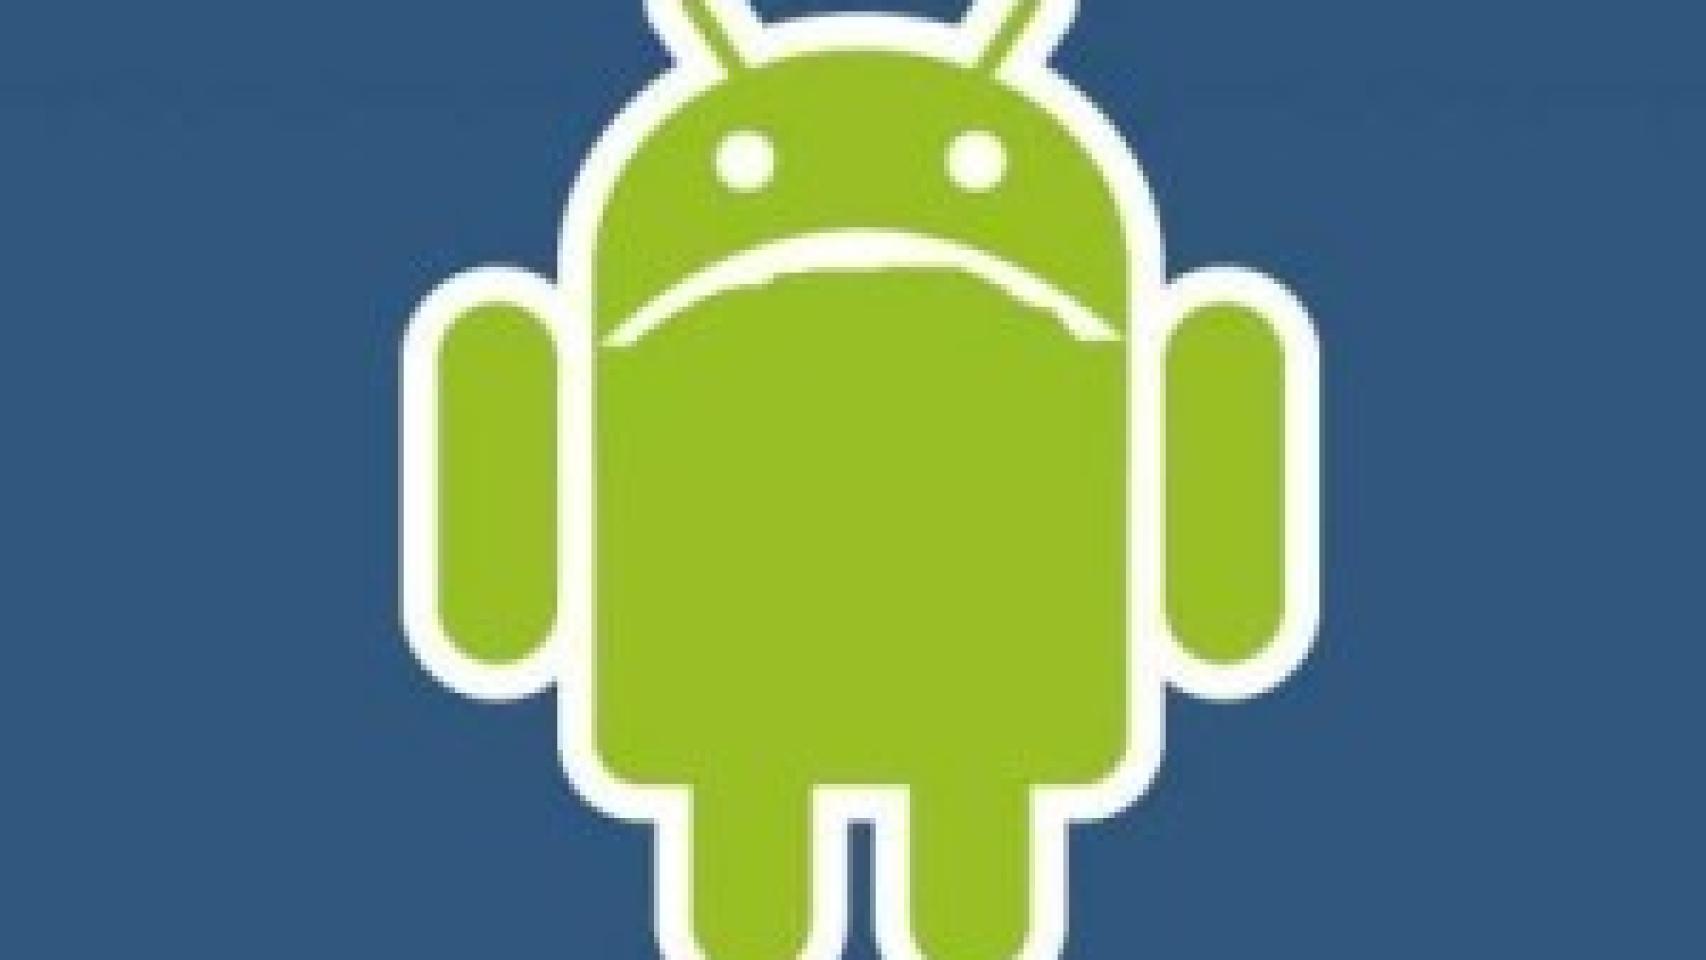 Problemas con Android